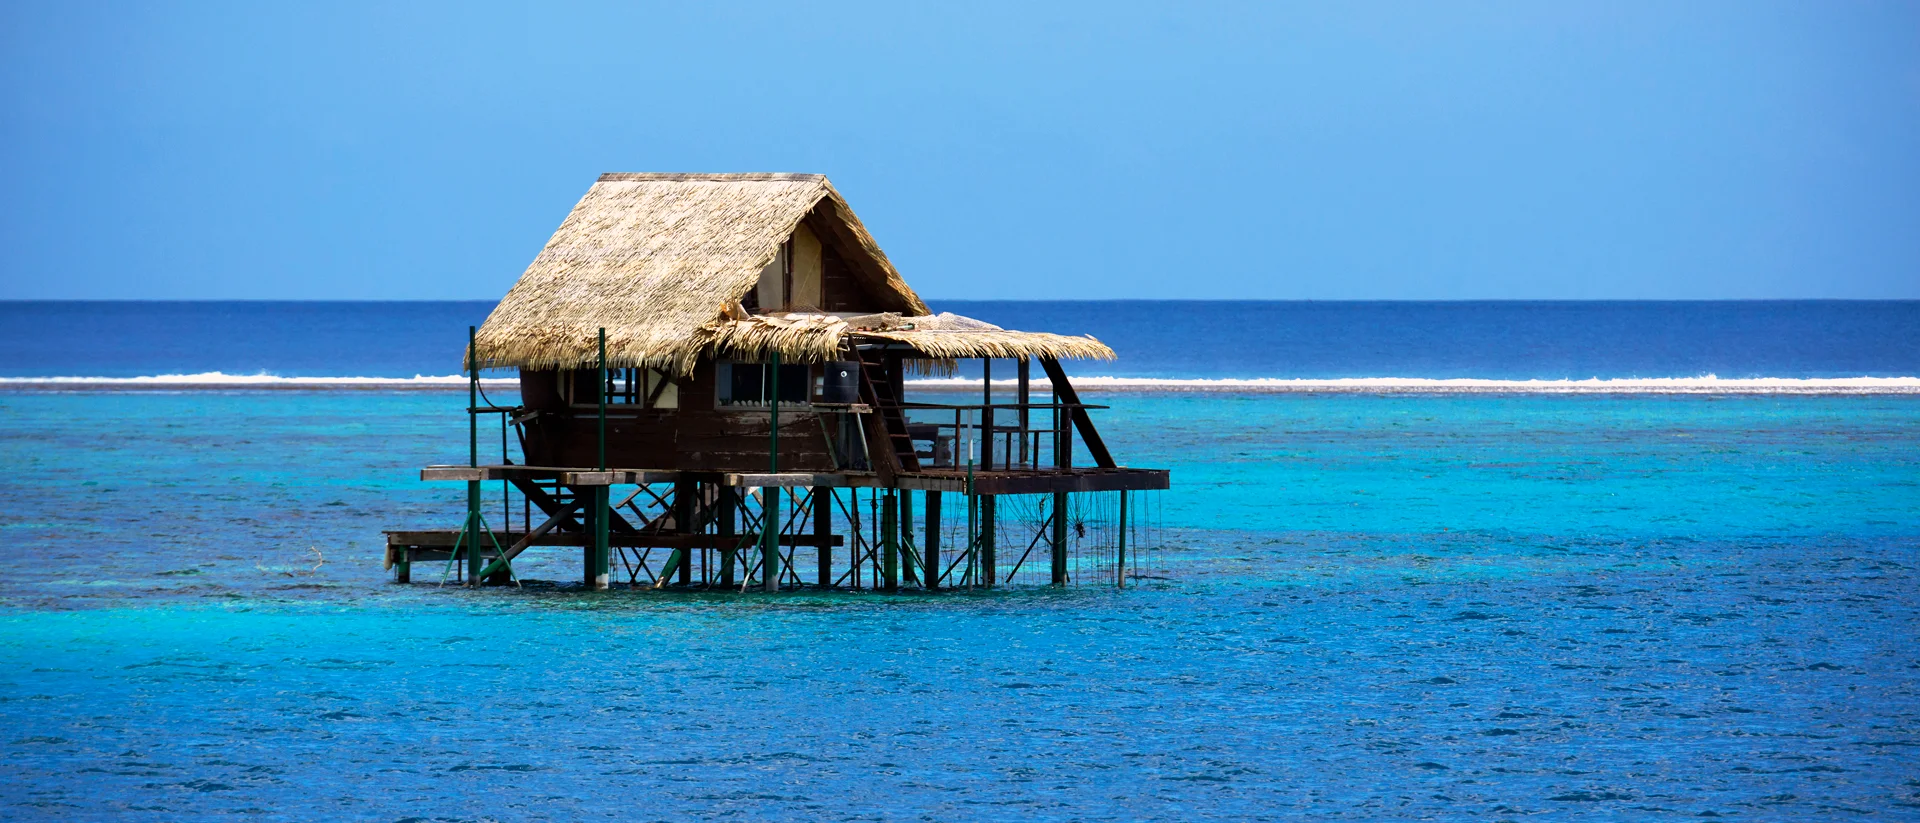 Tahiti sea cabin blue waters